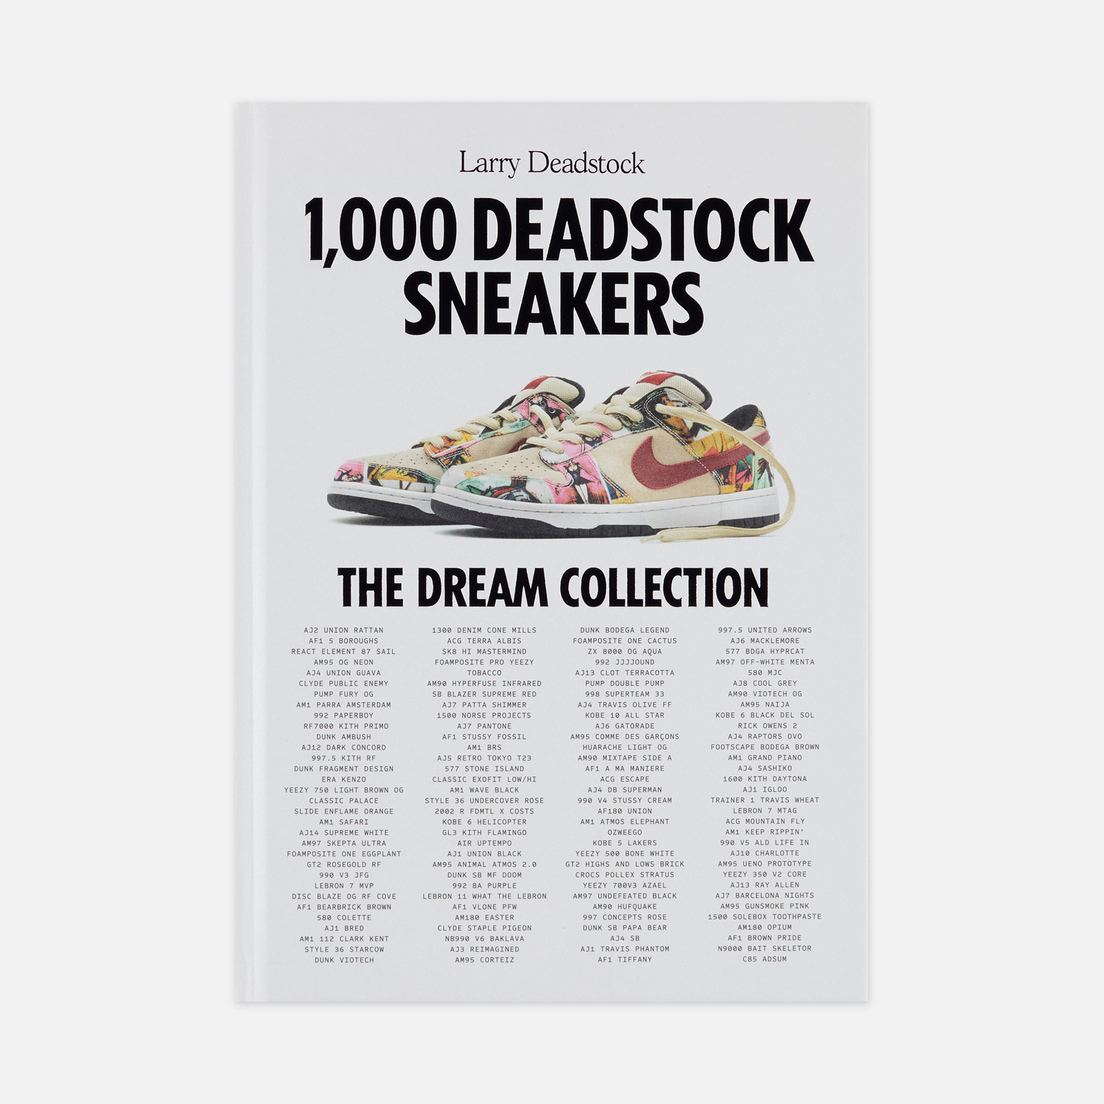 Abrams Книга 1000 Deadstock Sneakers